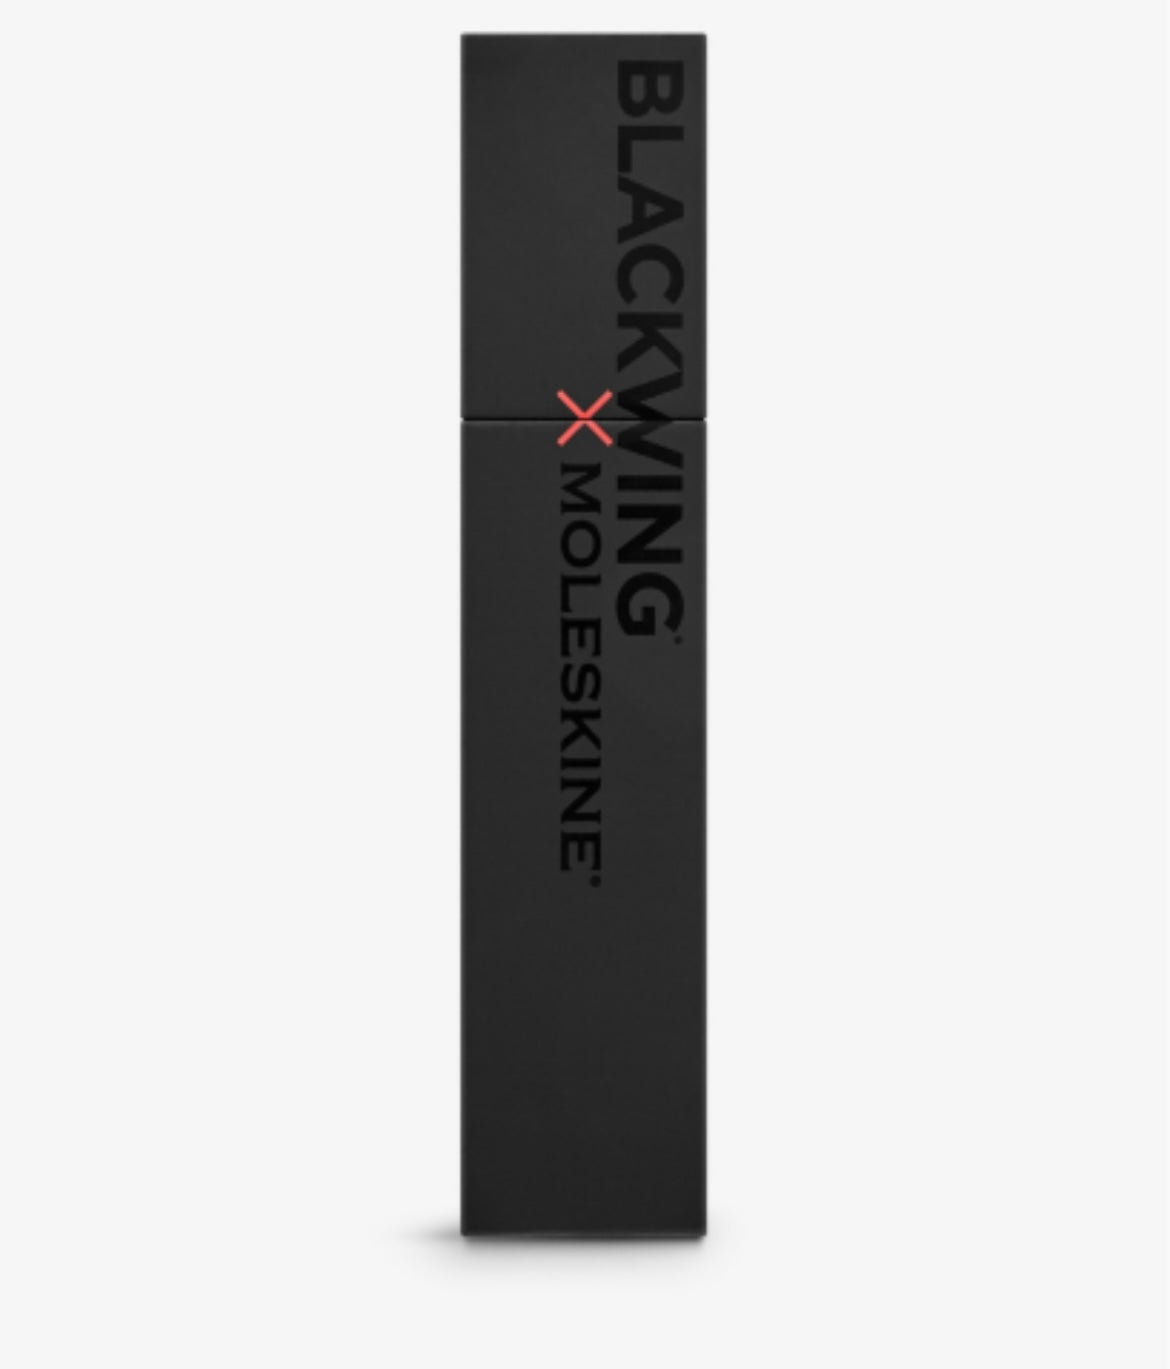 Blackwing x Moleskine Cedar Wood Pencil - Soft